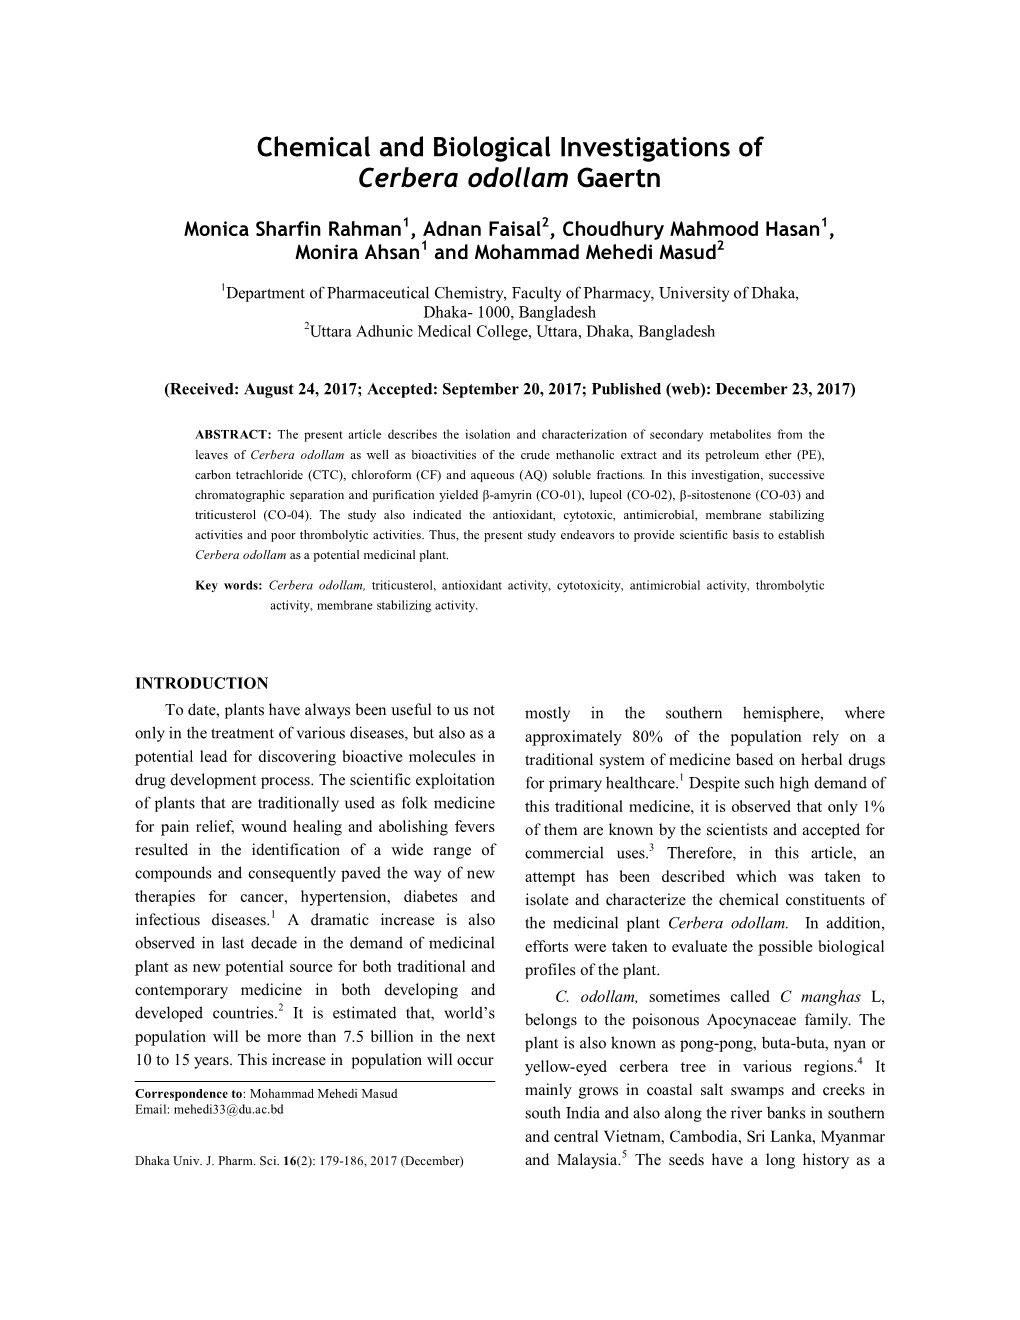 Chemical and Biological Investigations of Cerbera Odollam Gaertn